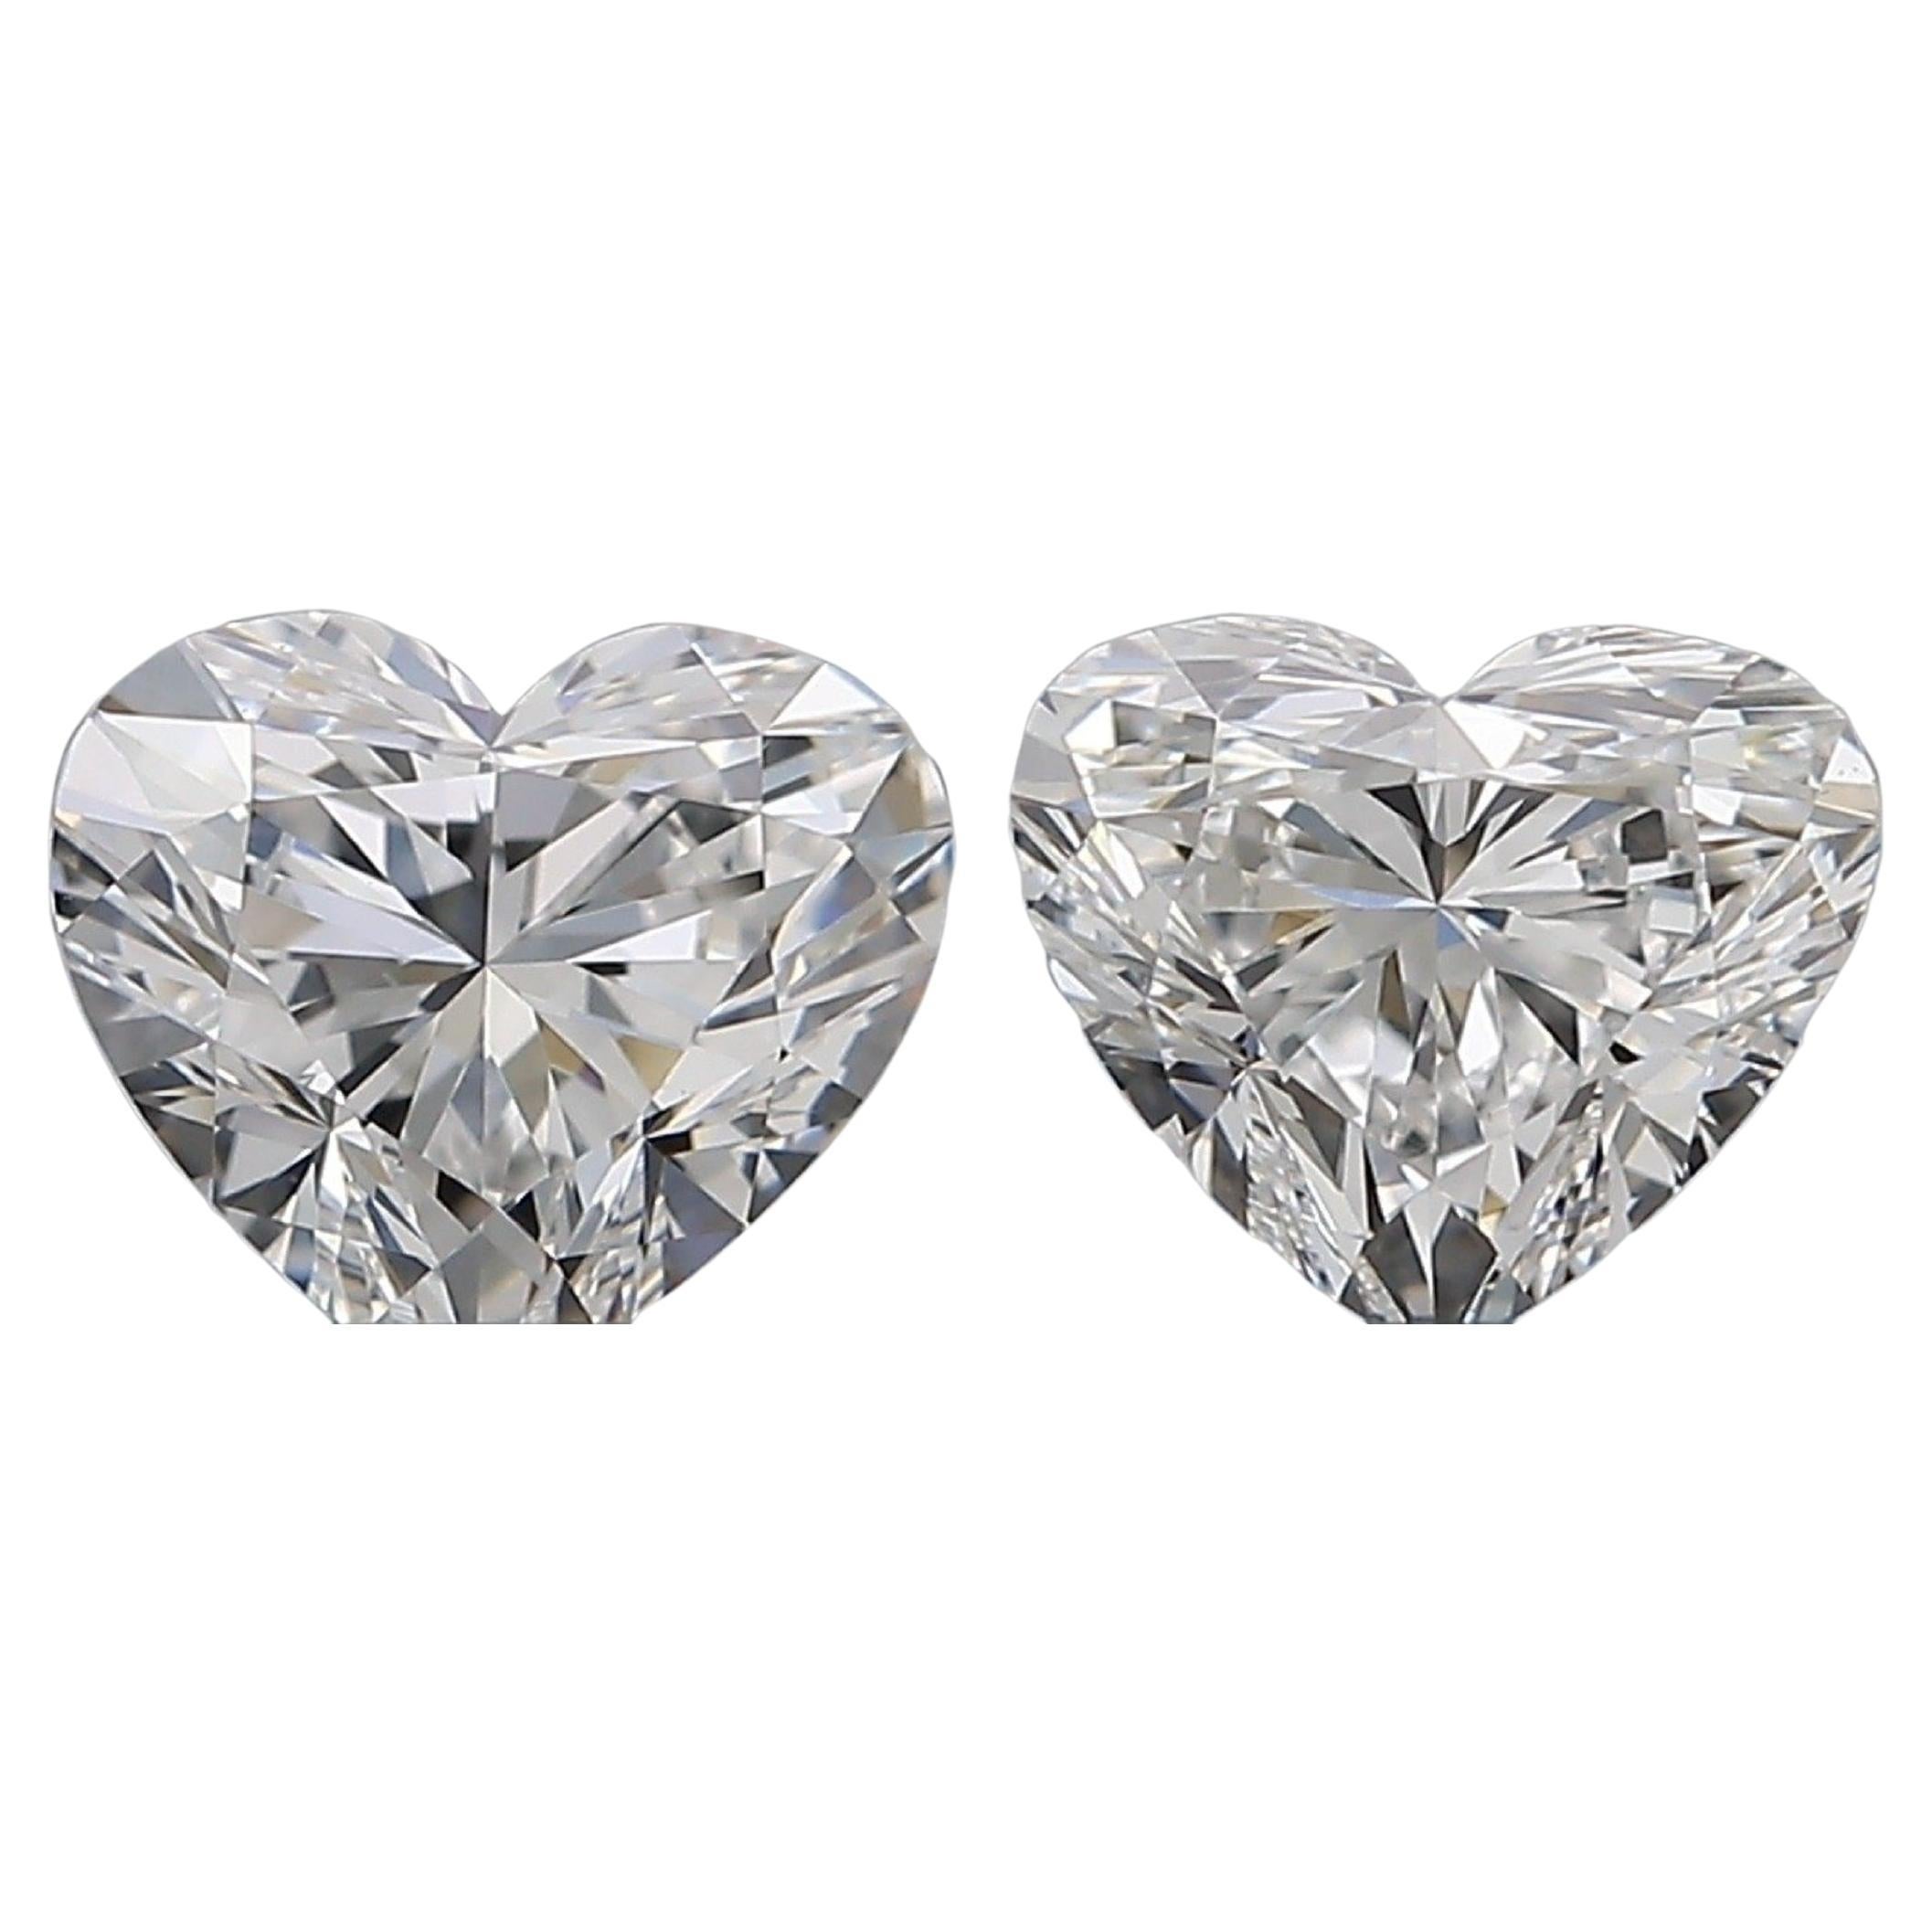 2 Pcs Natural Diamonds, 1.00 Ct, Heart, D 'Colourless' VS1, GIA Certificate For Sale